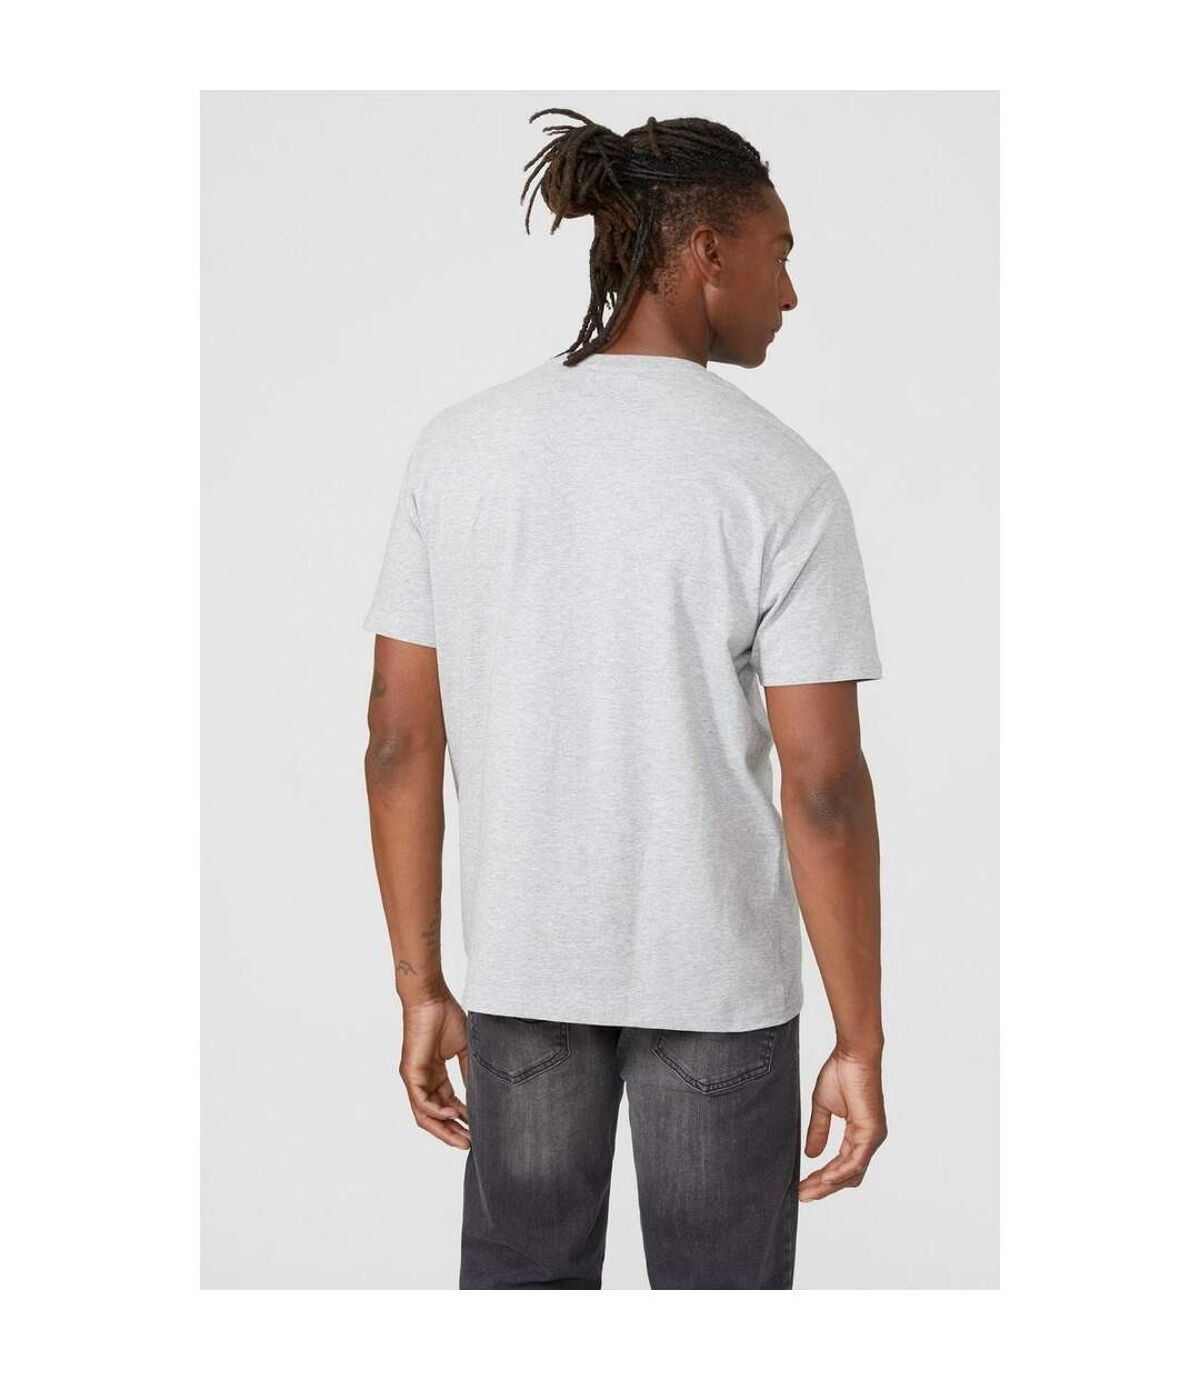 Mantaray - T-shirt - Homme (Gris chiné) - UTDH225